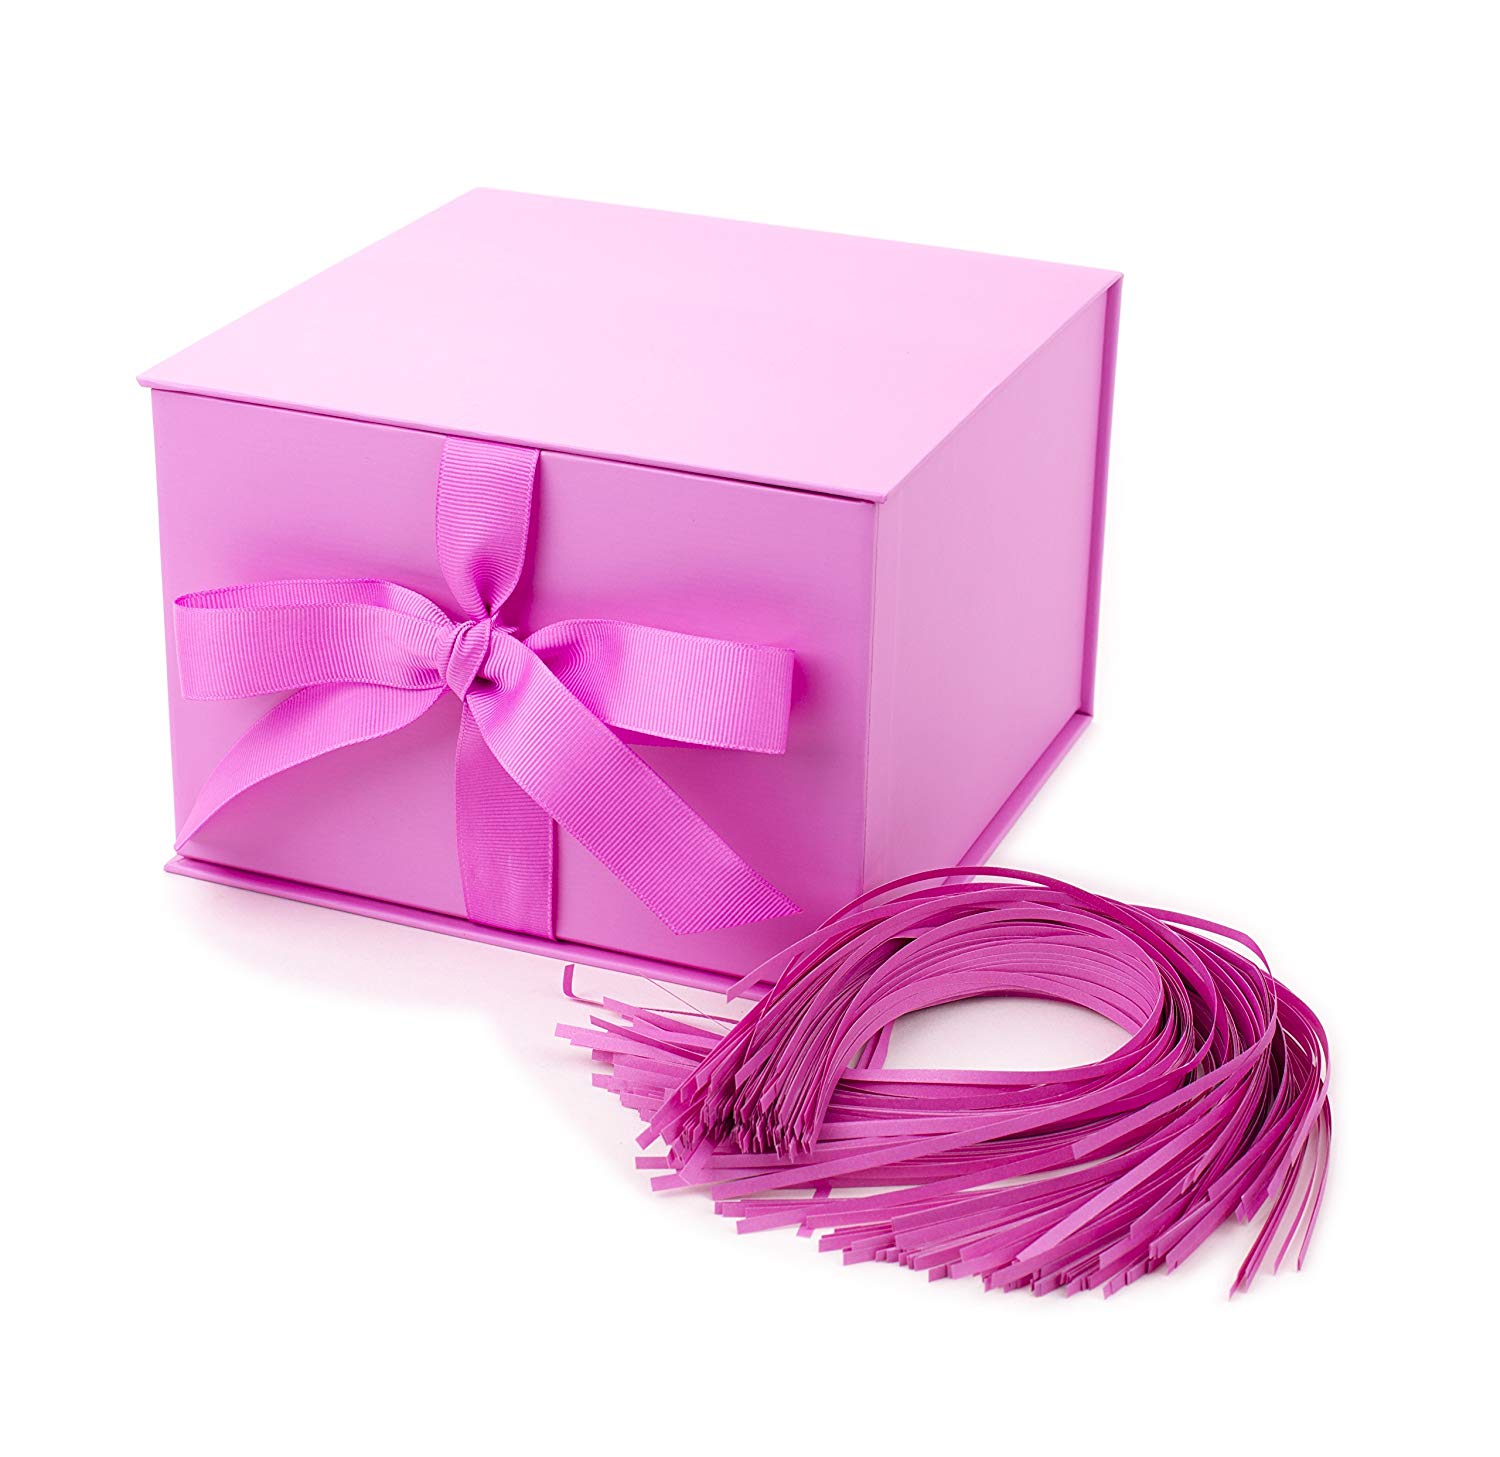 Amazon.com: Hallmark Large Gift Box (Light Pink): Kitchen & Dining